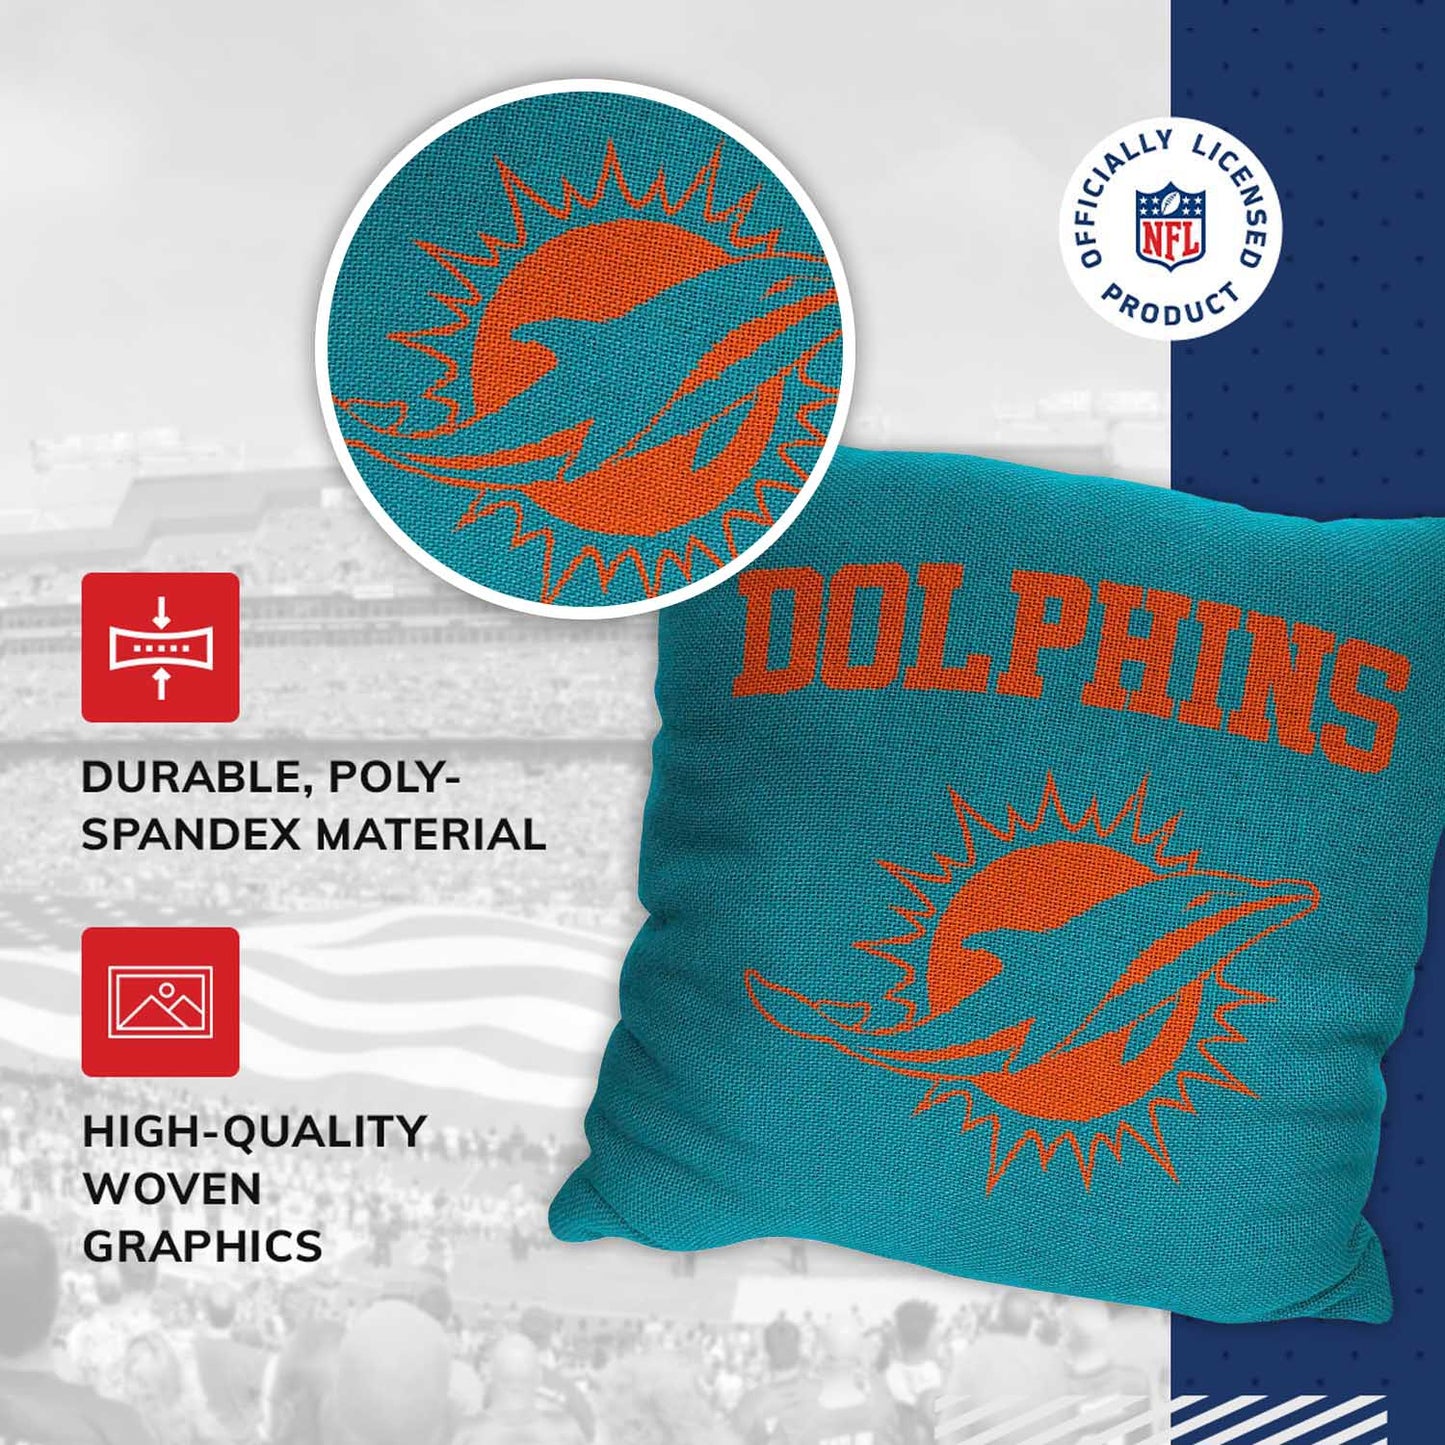 Miami Dolphins NFL Decorative Football Throw Pillow - Aqua